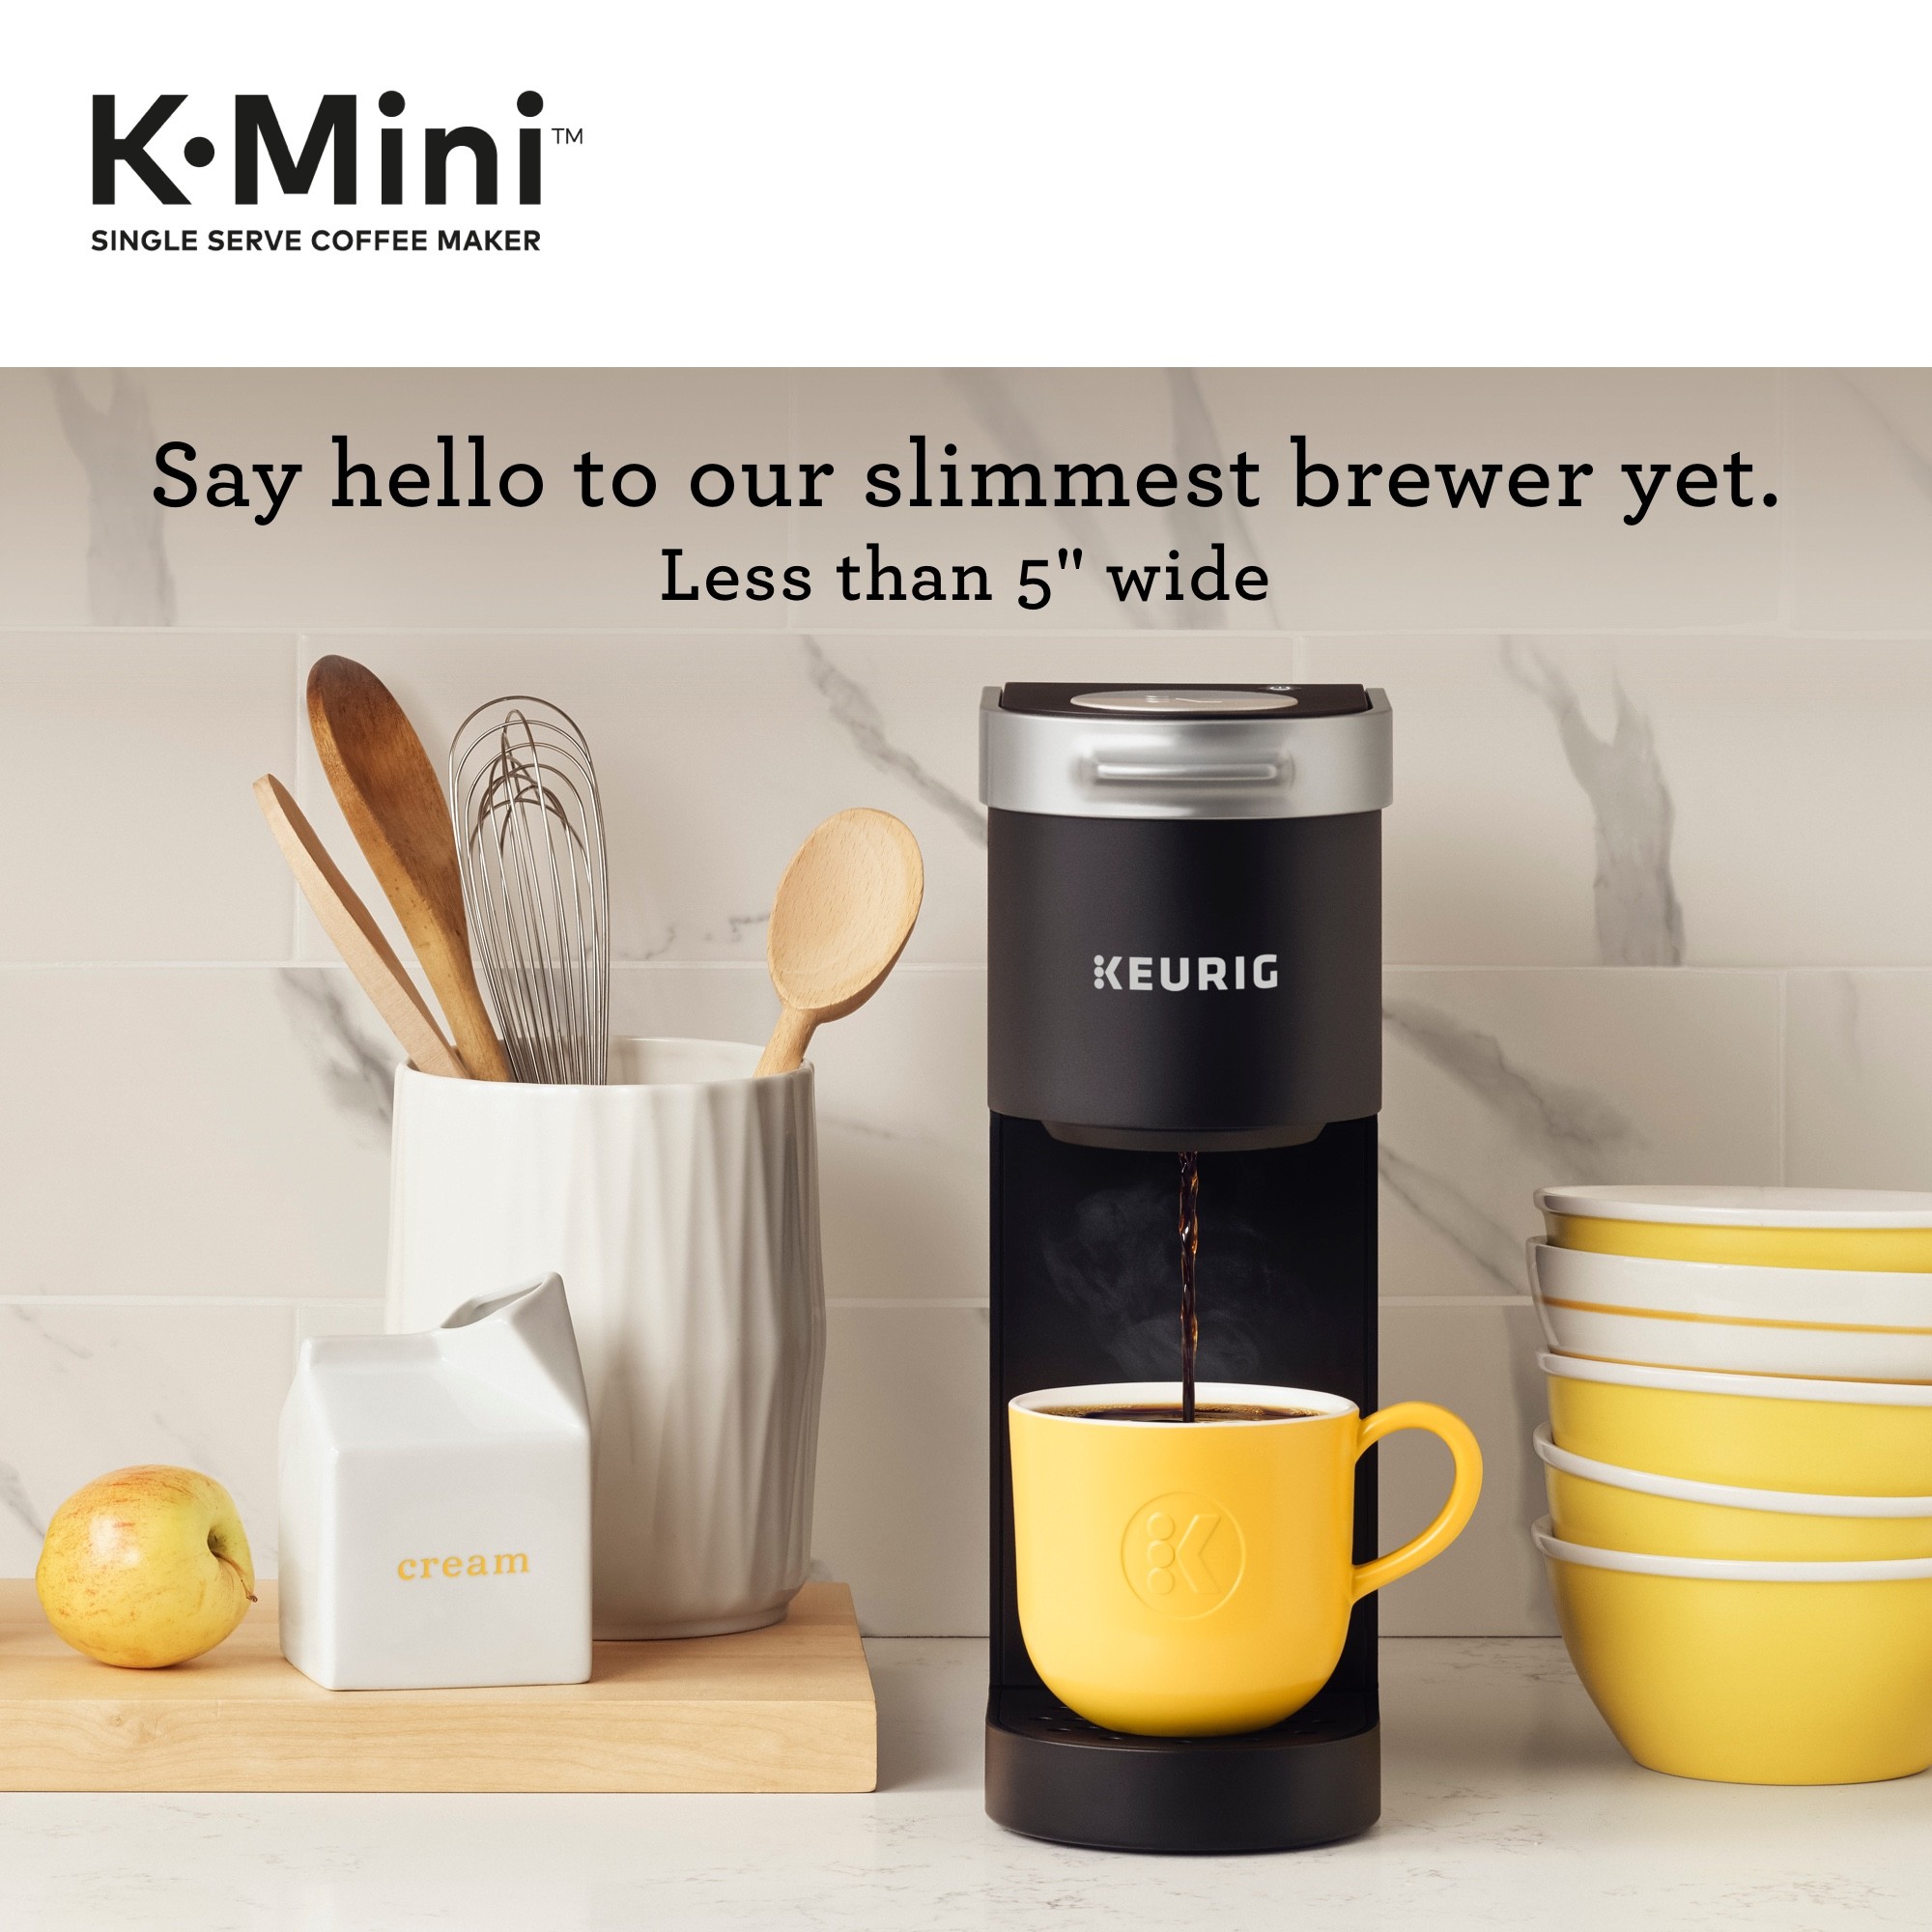 Keurig K-Mini Single Serve Coffee Maker, Black - image 4 of 21